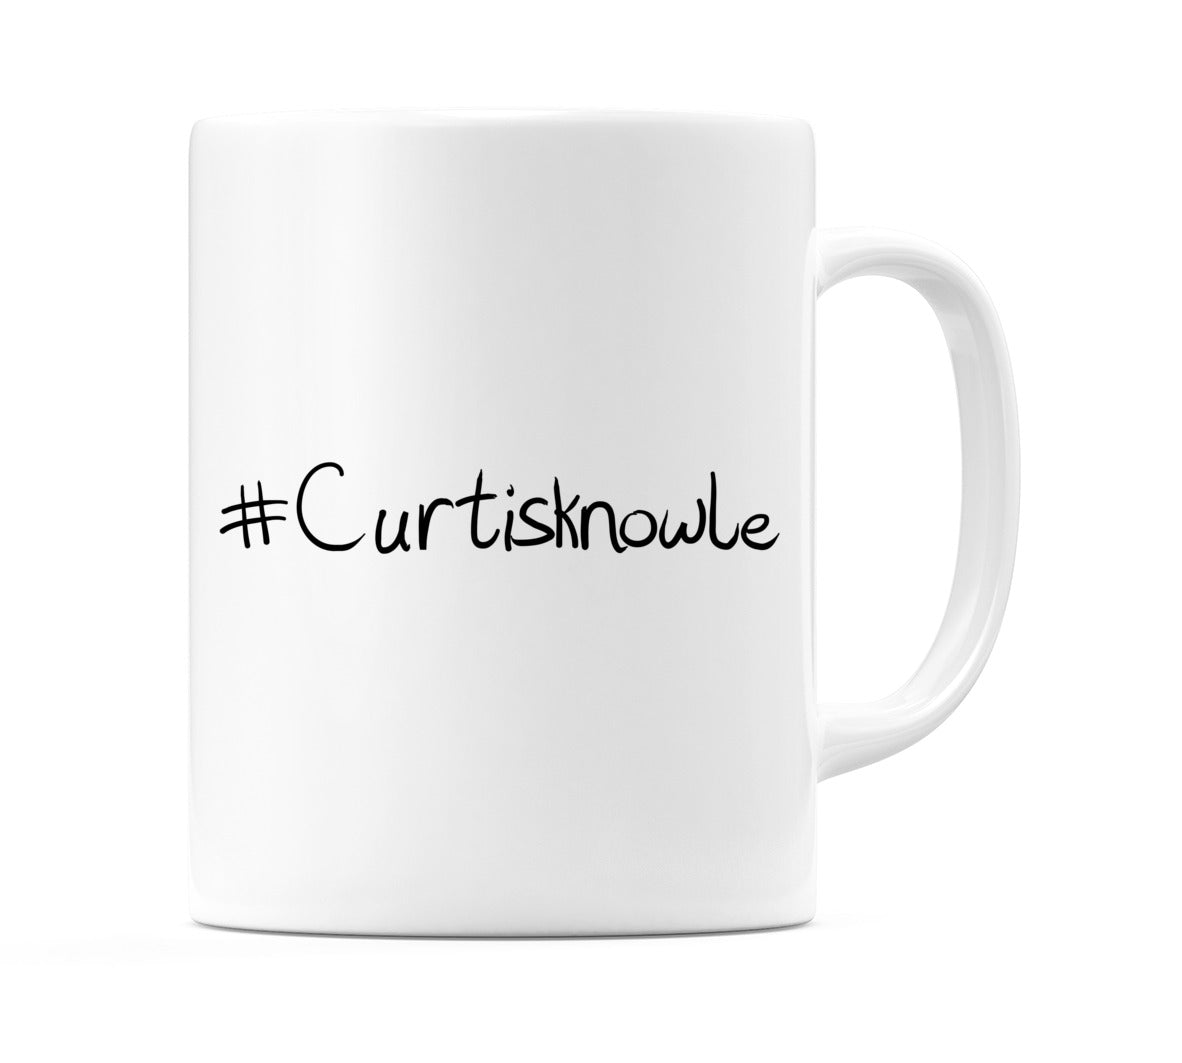 #Curtisknowle Mug